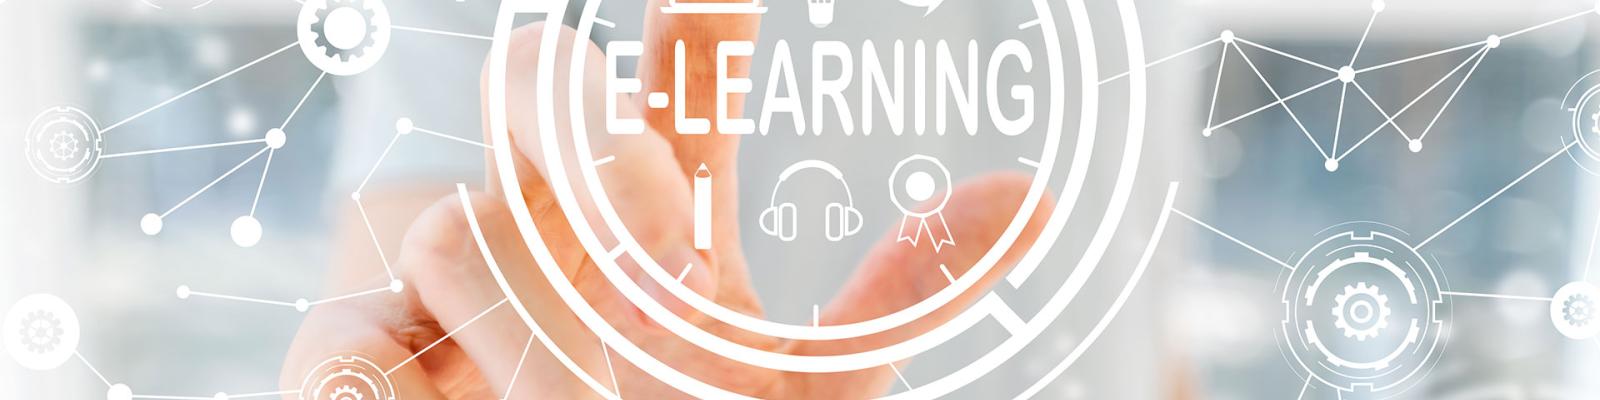 E-learning title image